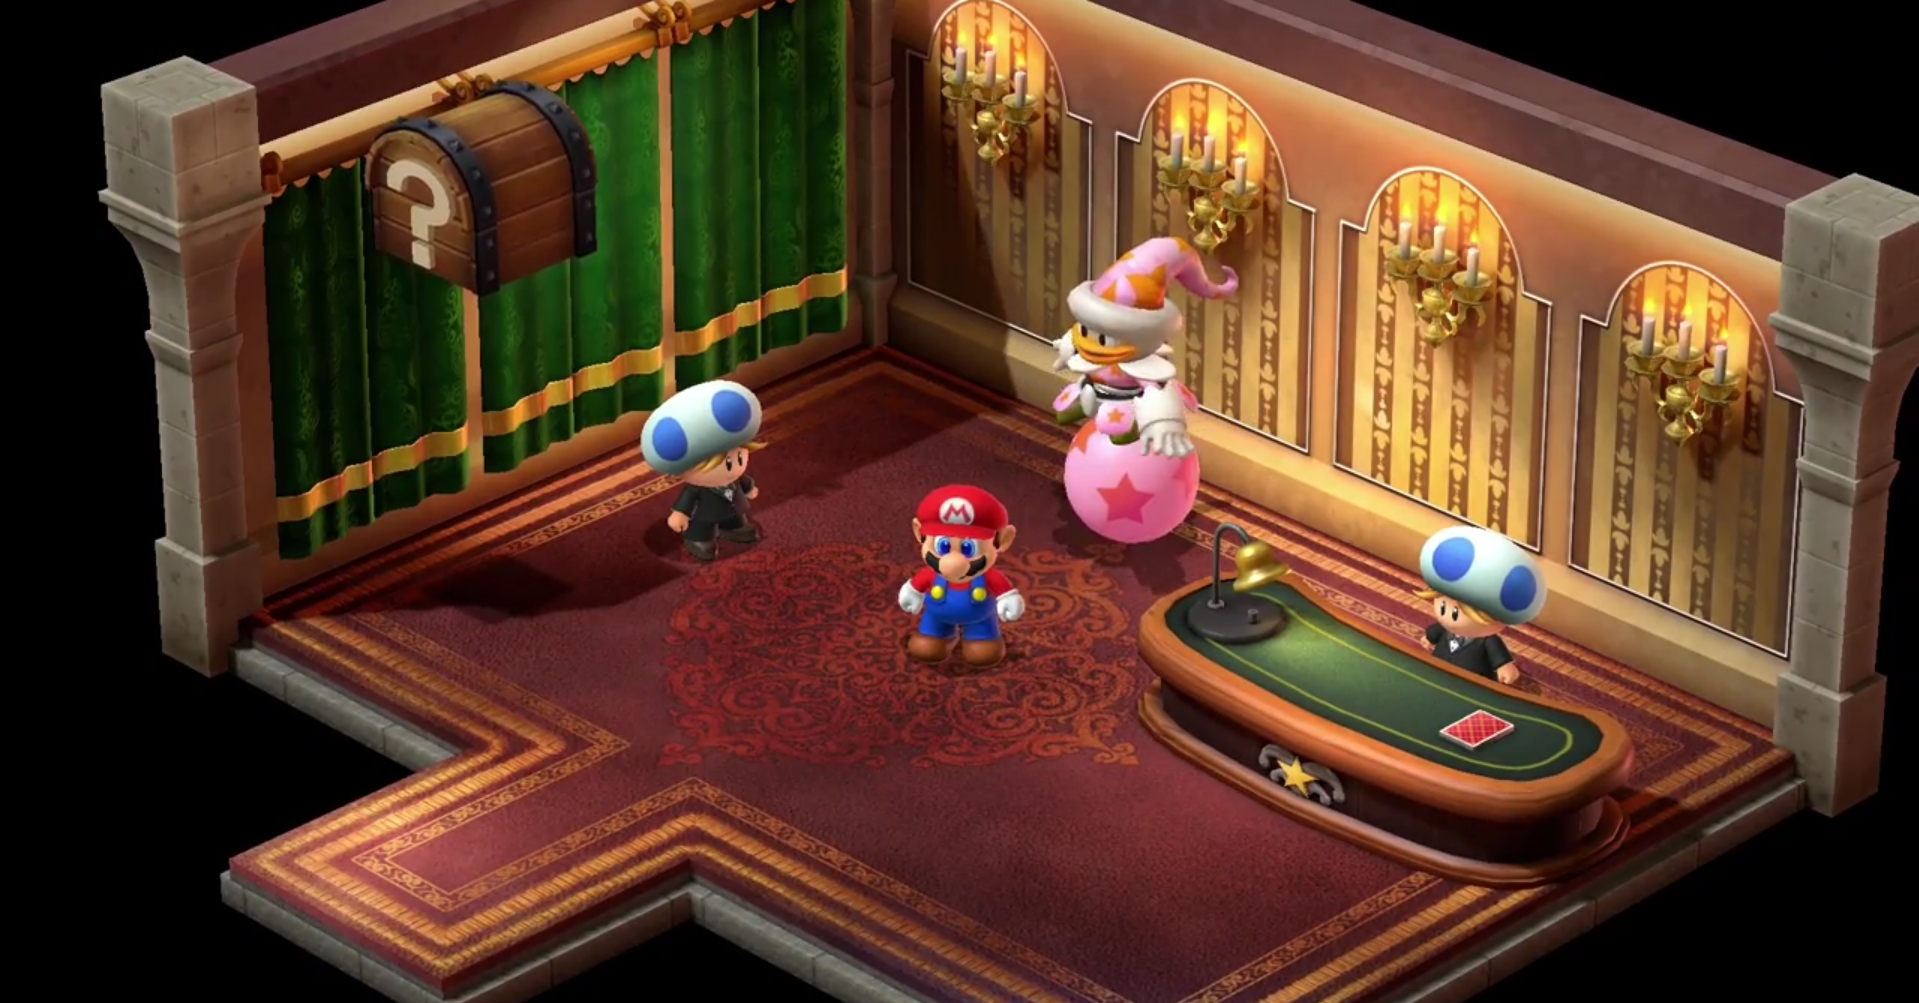 Grate Guy's casino in Super Mario RPG.